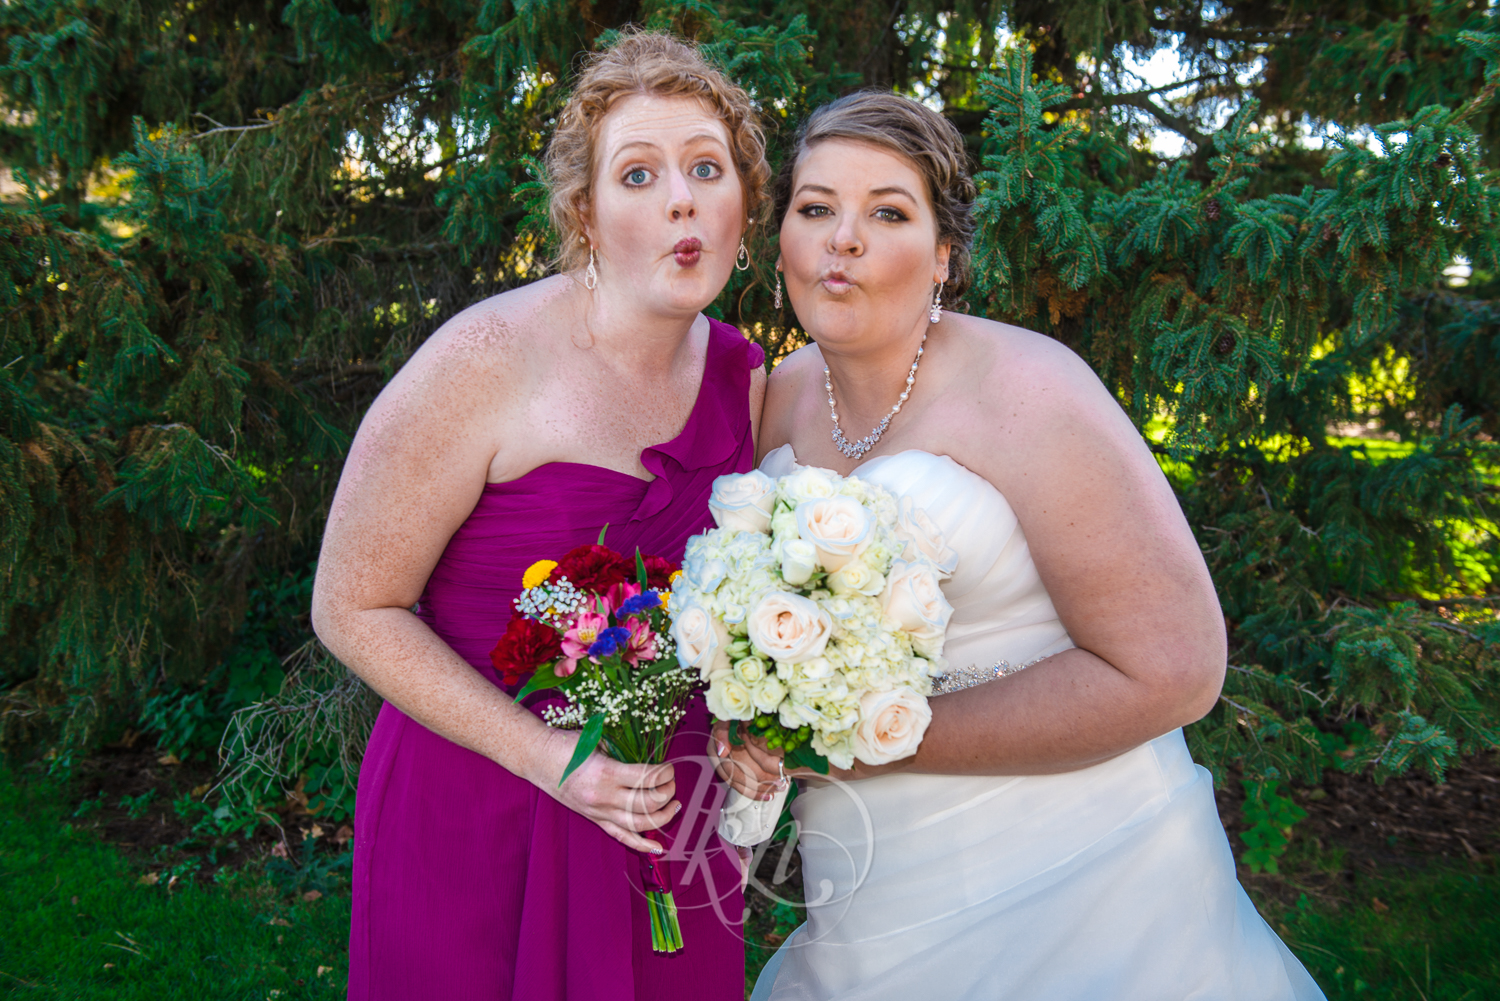  Woodbury Wedding Photography - Amber & Tristan - RKH Images-20 